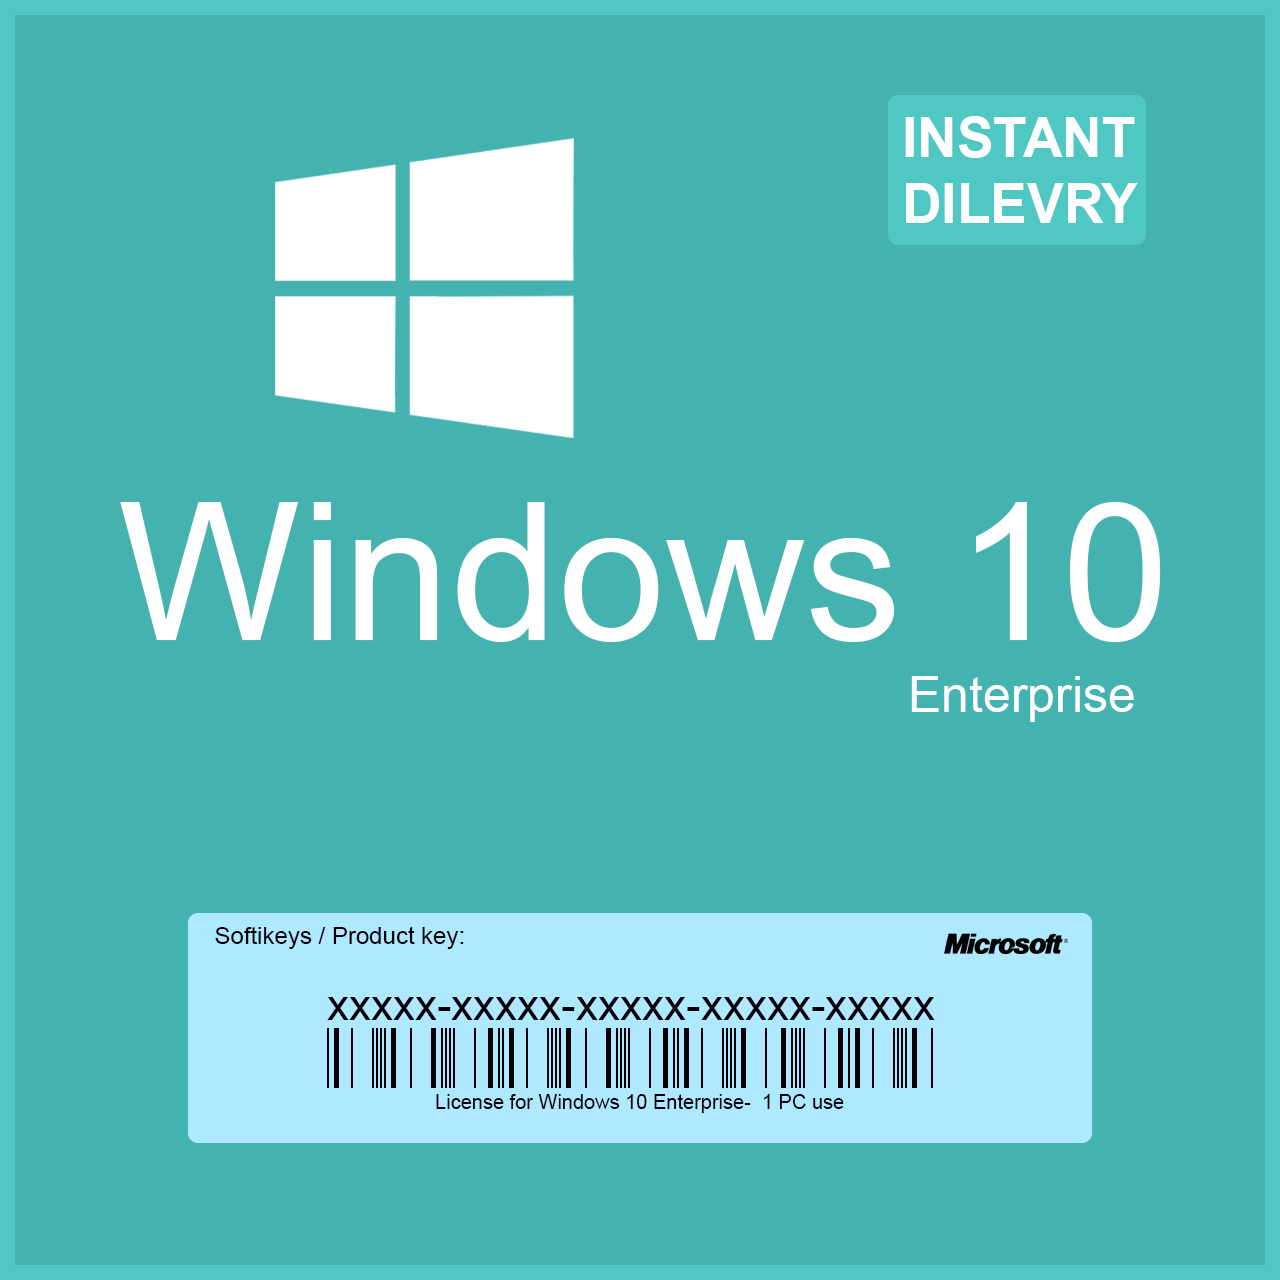 Buy Windows 10 Enterprise Product Key Only $35.99 - Windows Store